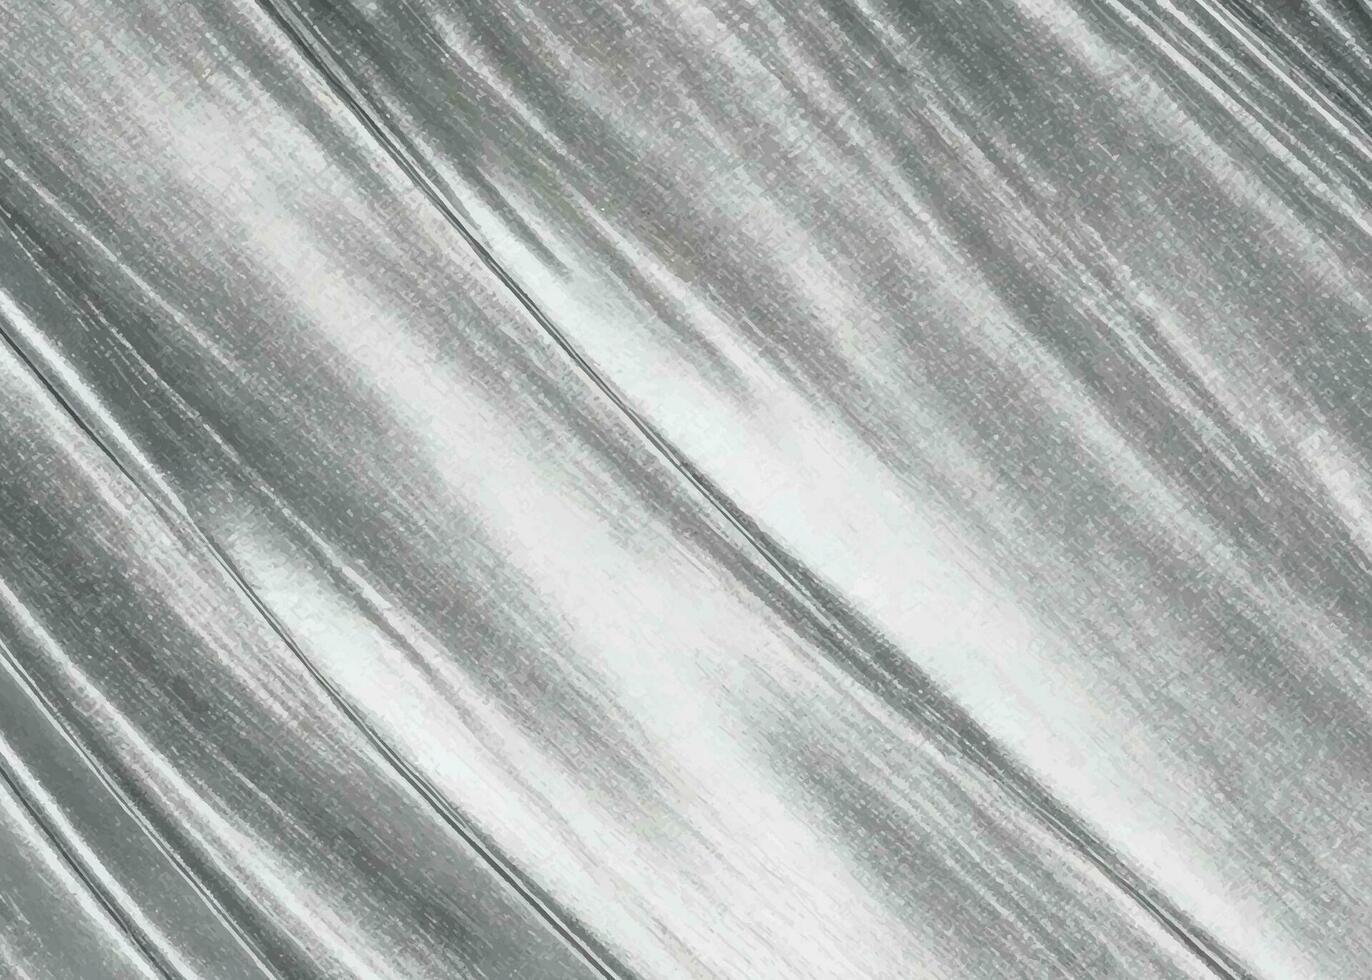 https://static.vecteezy.com/system/resources/previews/025/862/197/non_2x/silver-foil-shiny-paper-texture-background-metallic-texture-background-foil-texture-paper-texture-silver-texture-background-silver-foil-background-gray-platinum-metallic-texture-vector.jpg